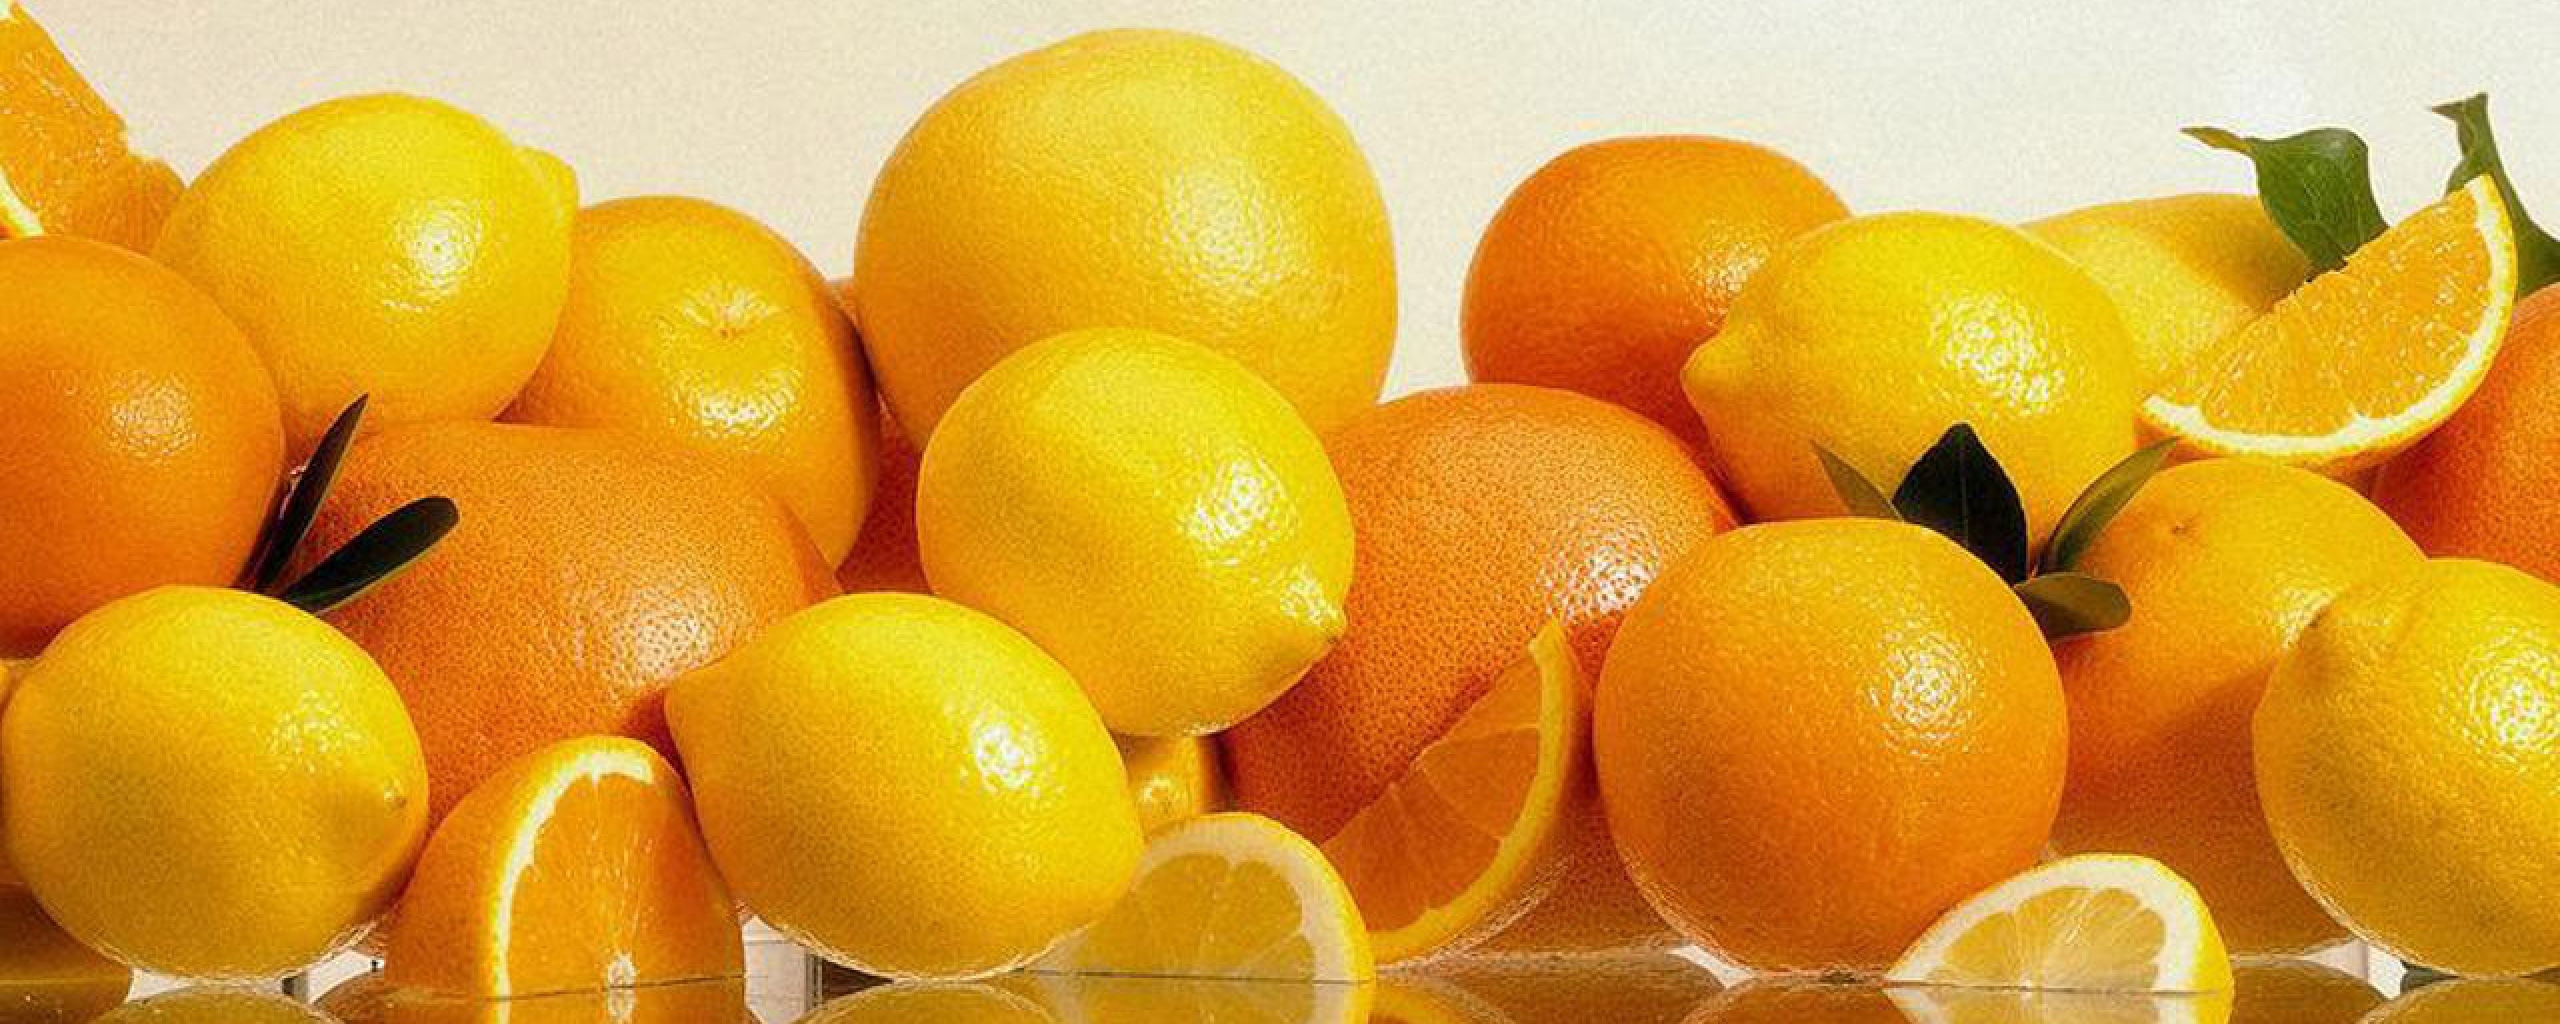 Lemons oranges